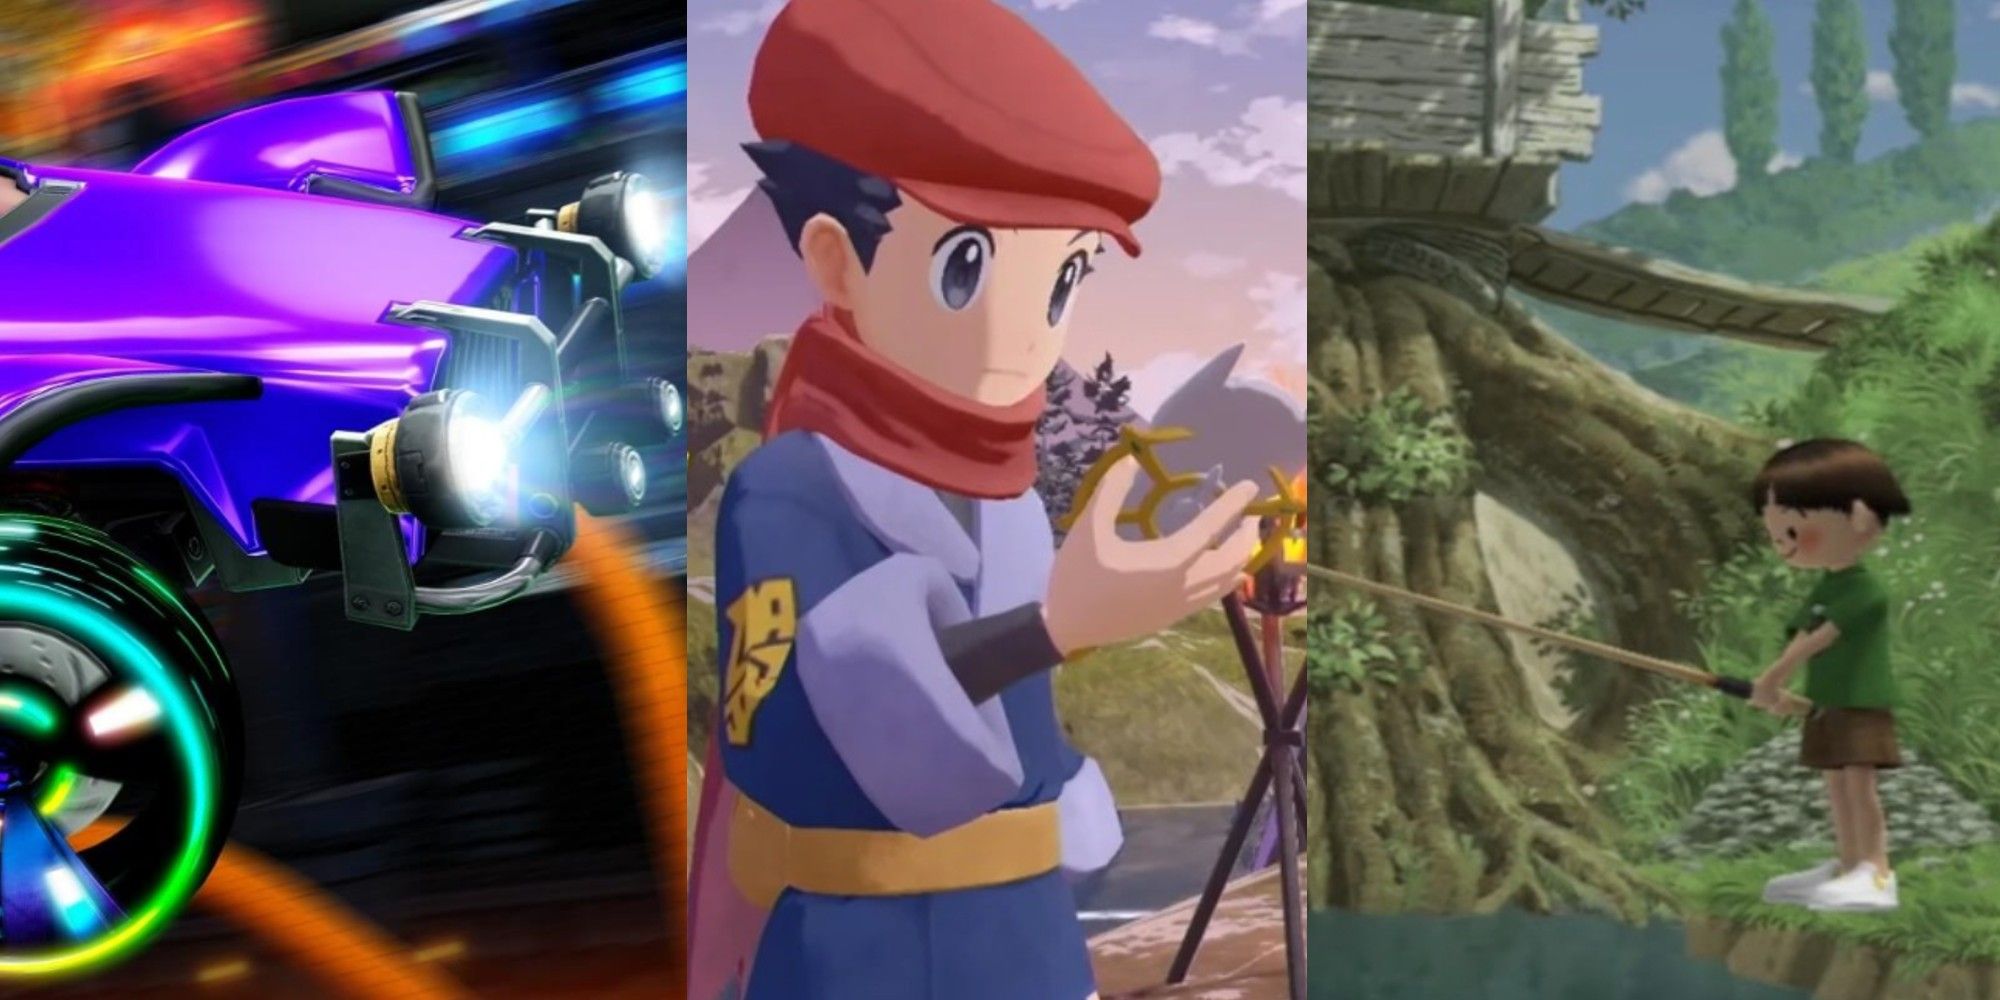 Split image of stills from various video games including Pokemon